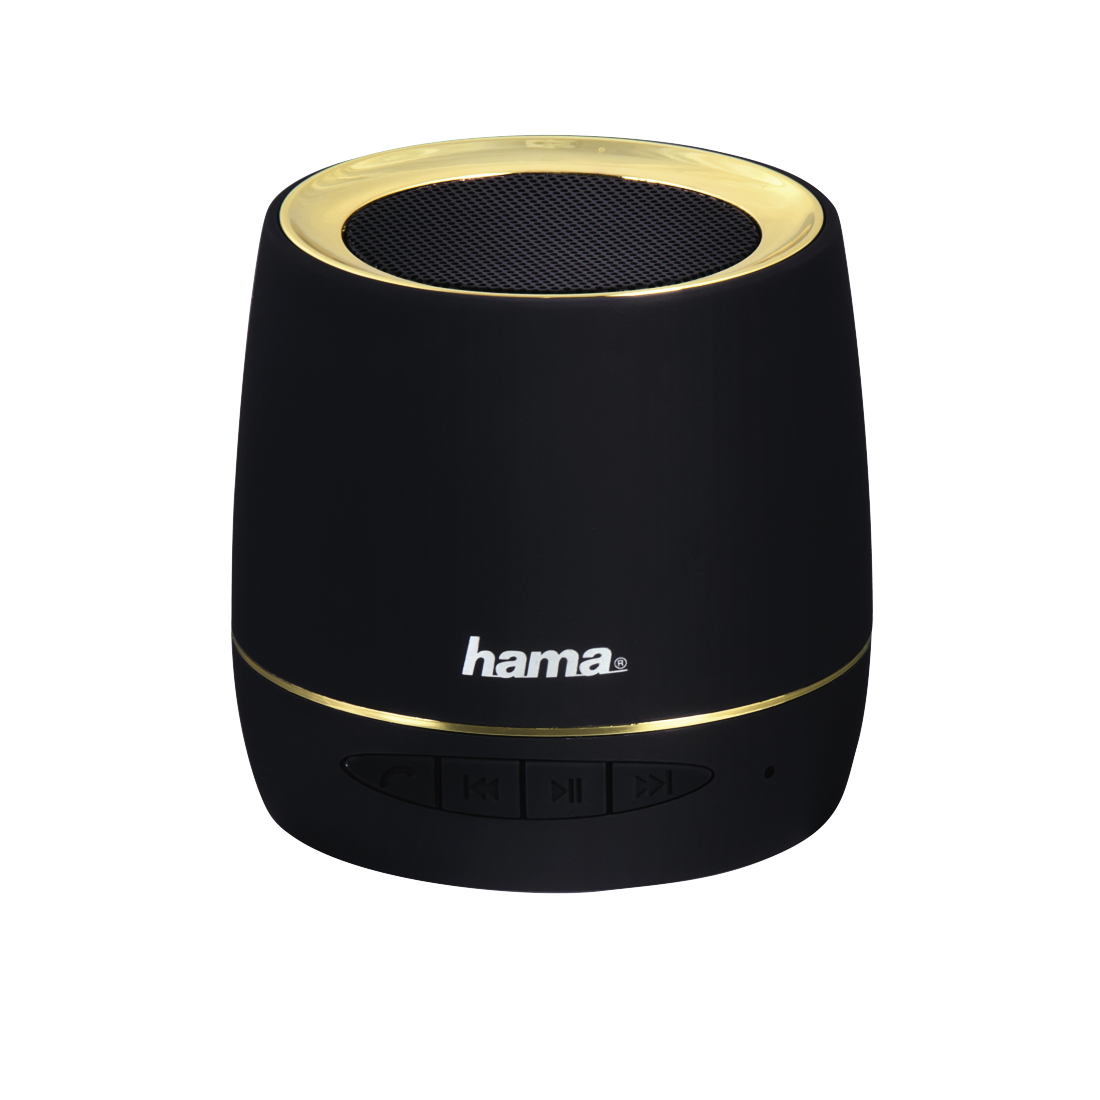 00124484 Hama Mobile Bluetooth® Speaker, black | hama.com